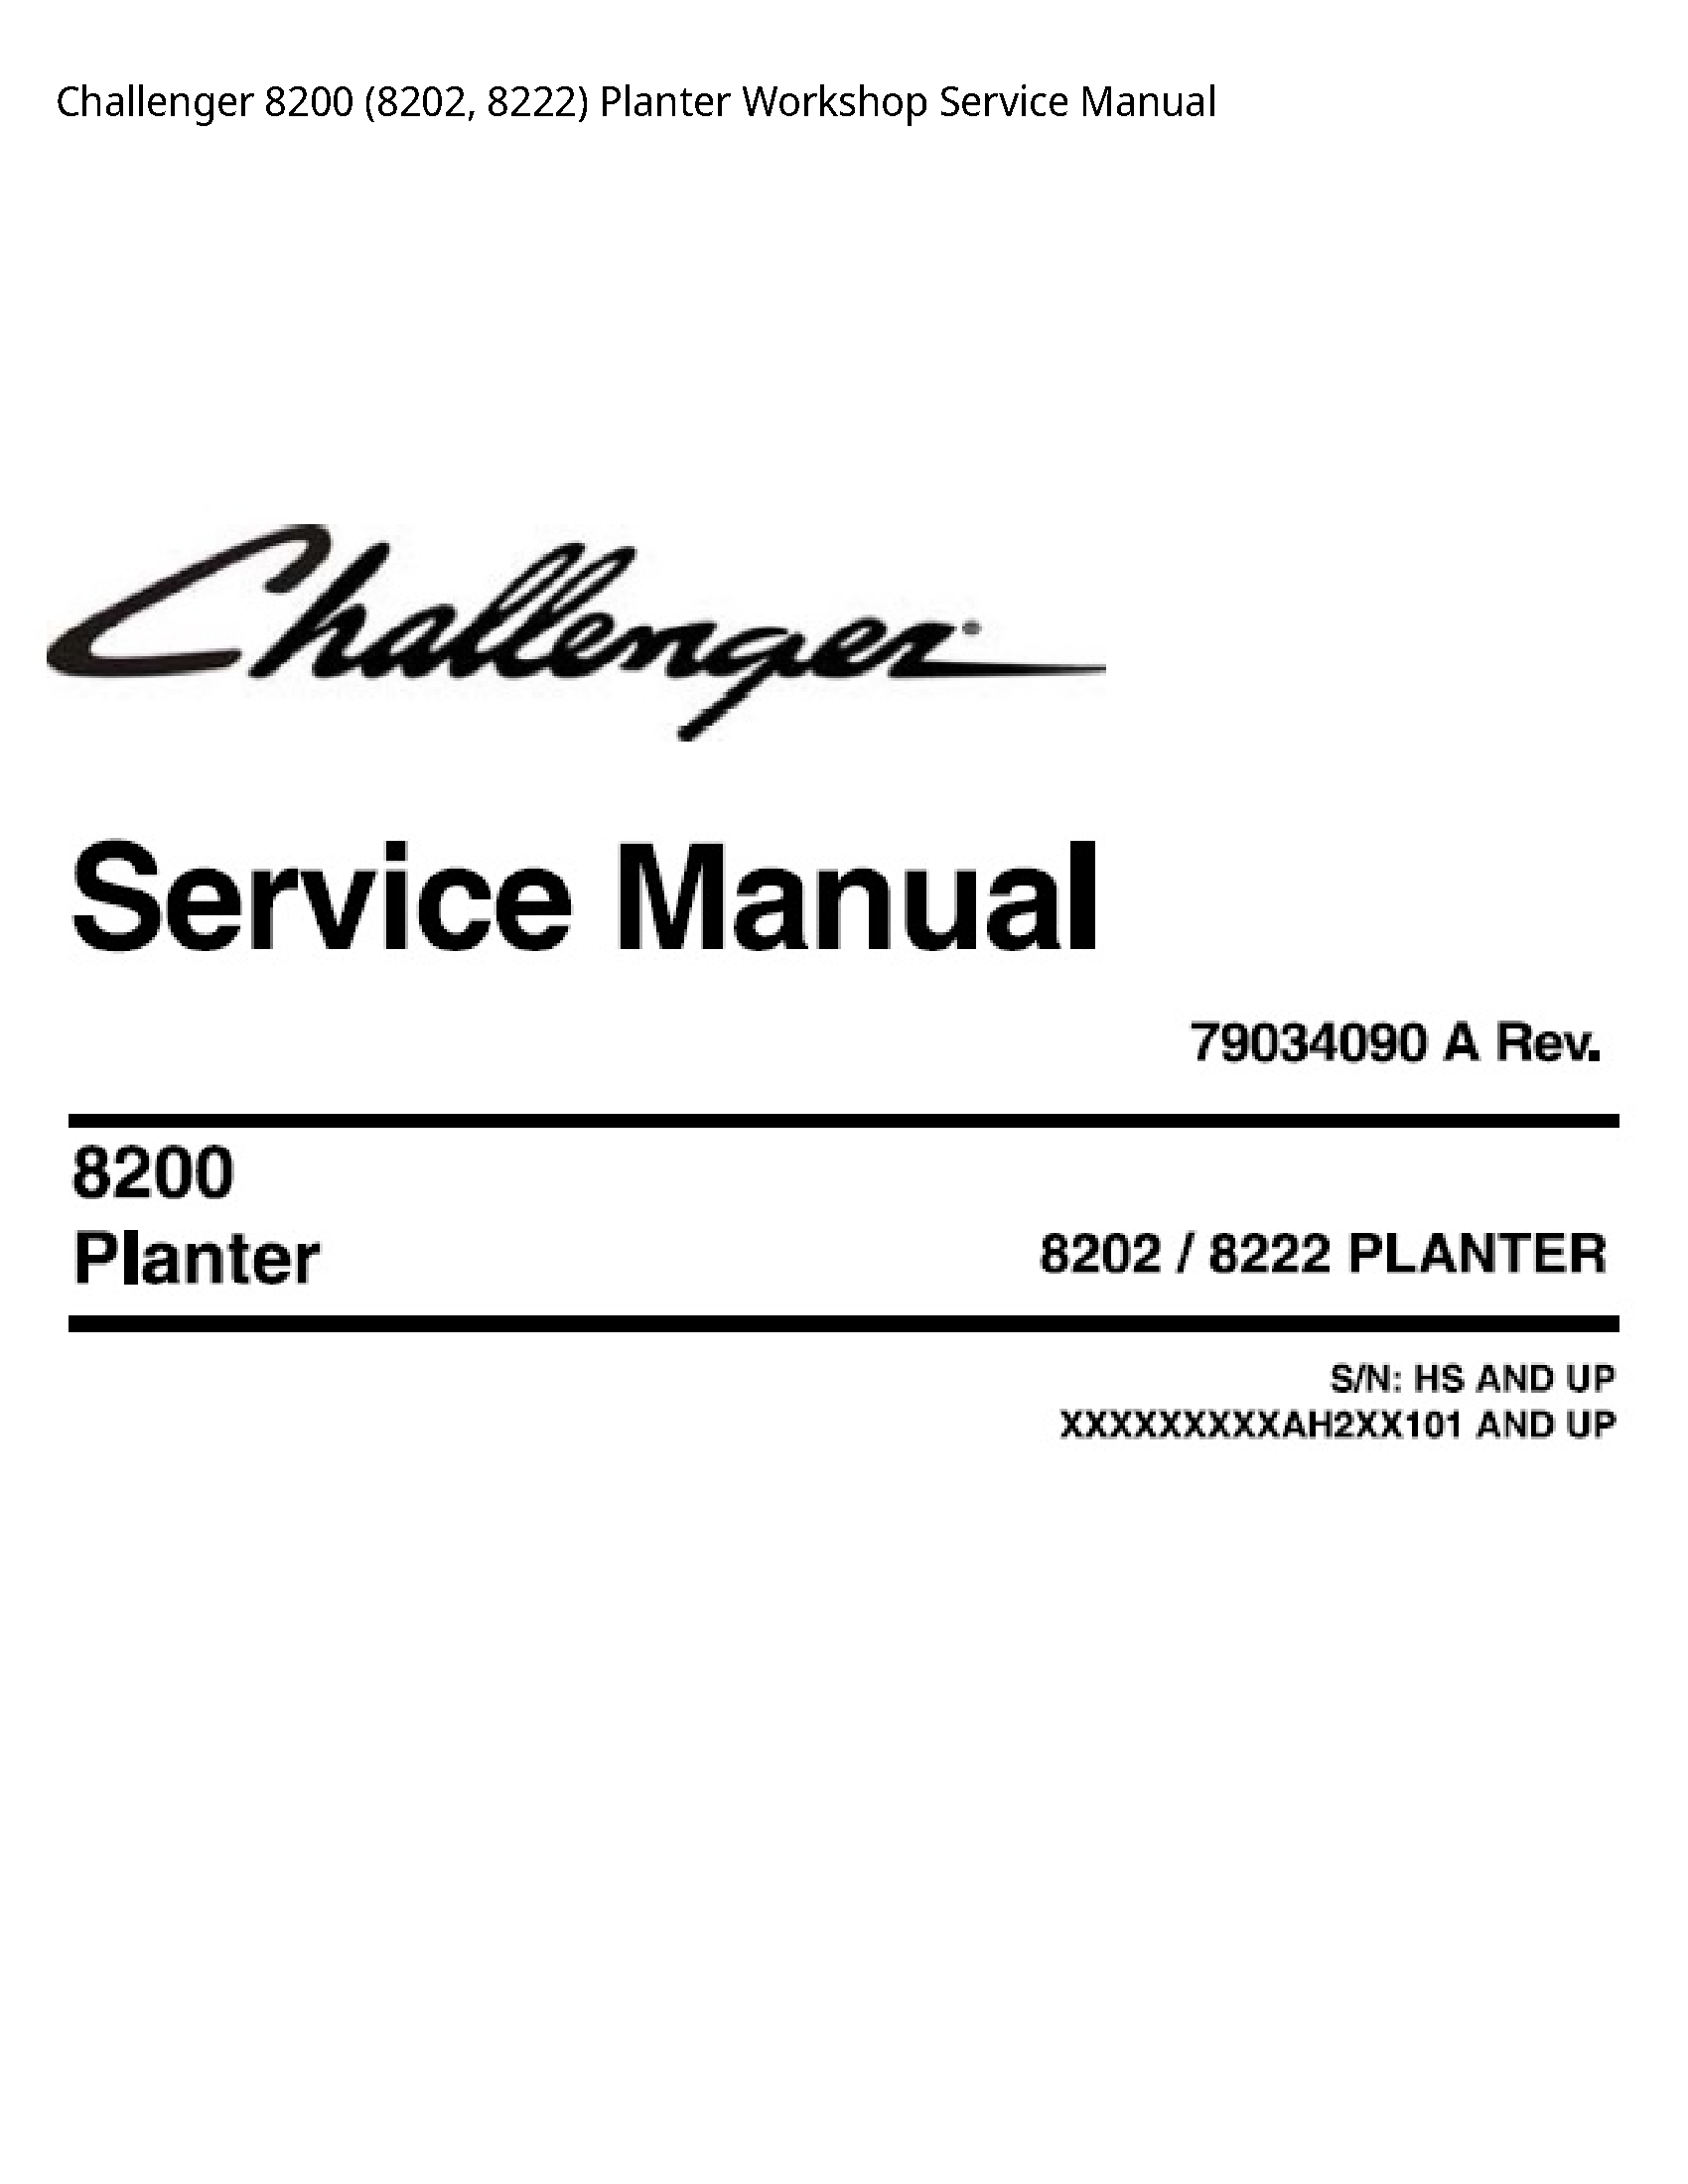 Challenger 8200 Planter Service manual